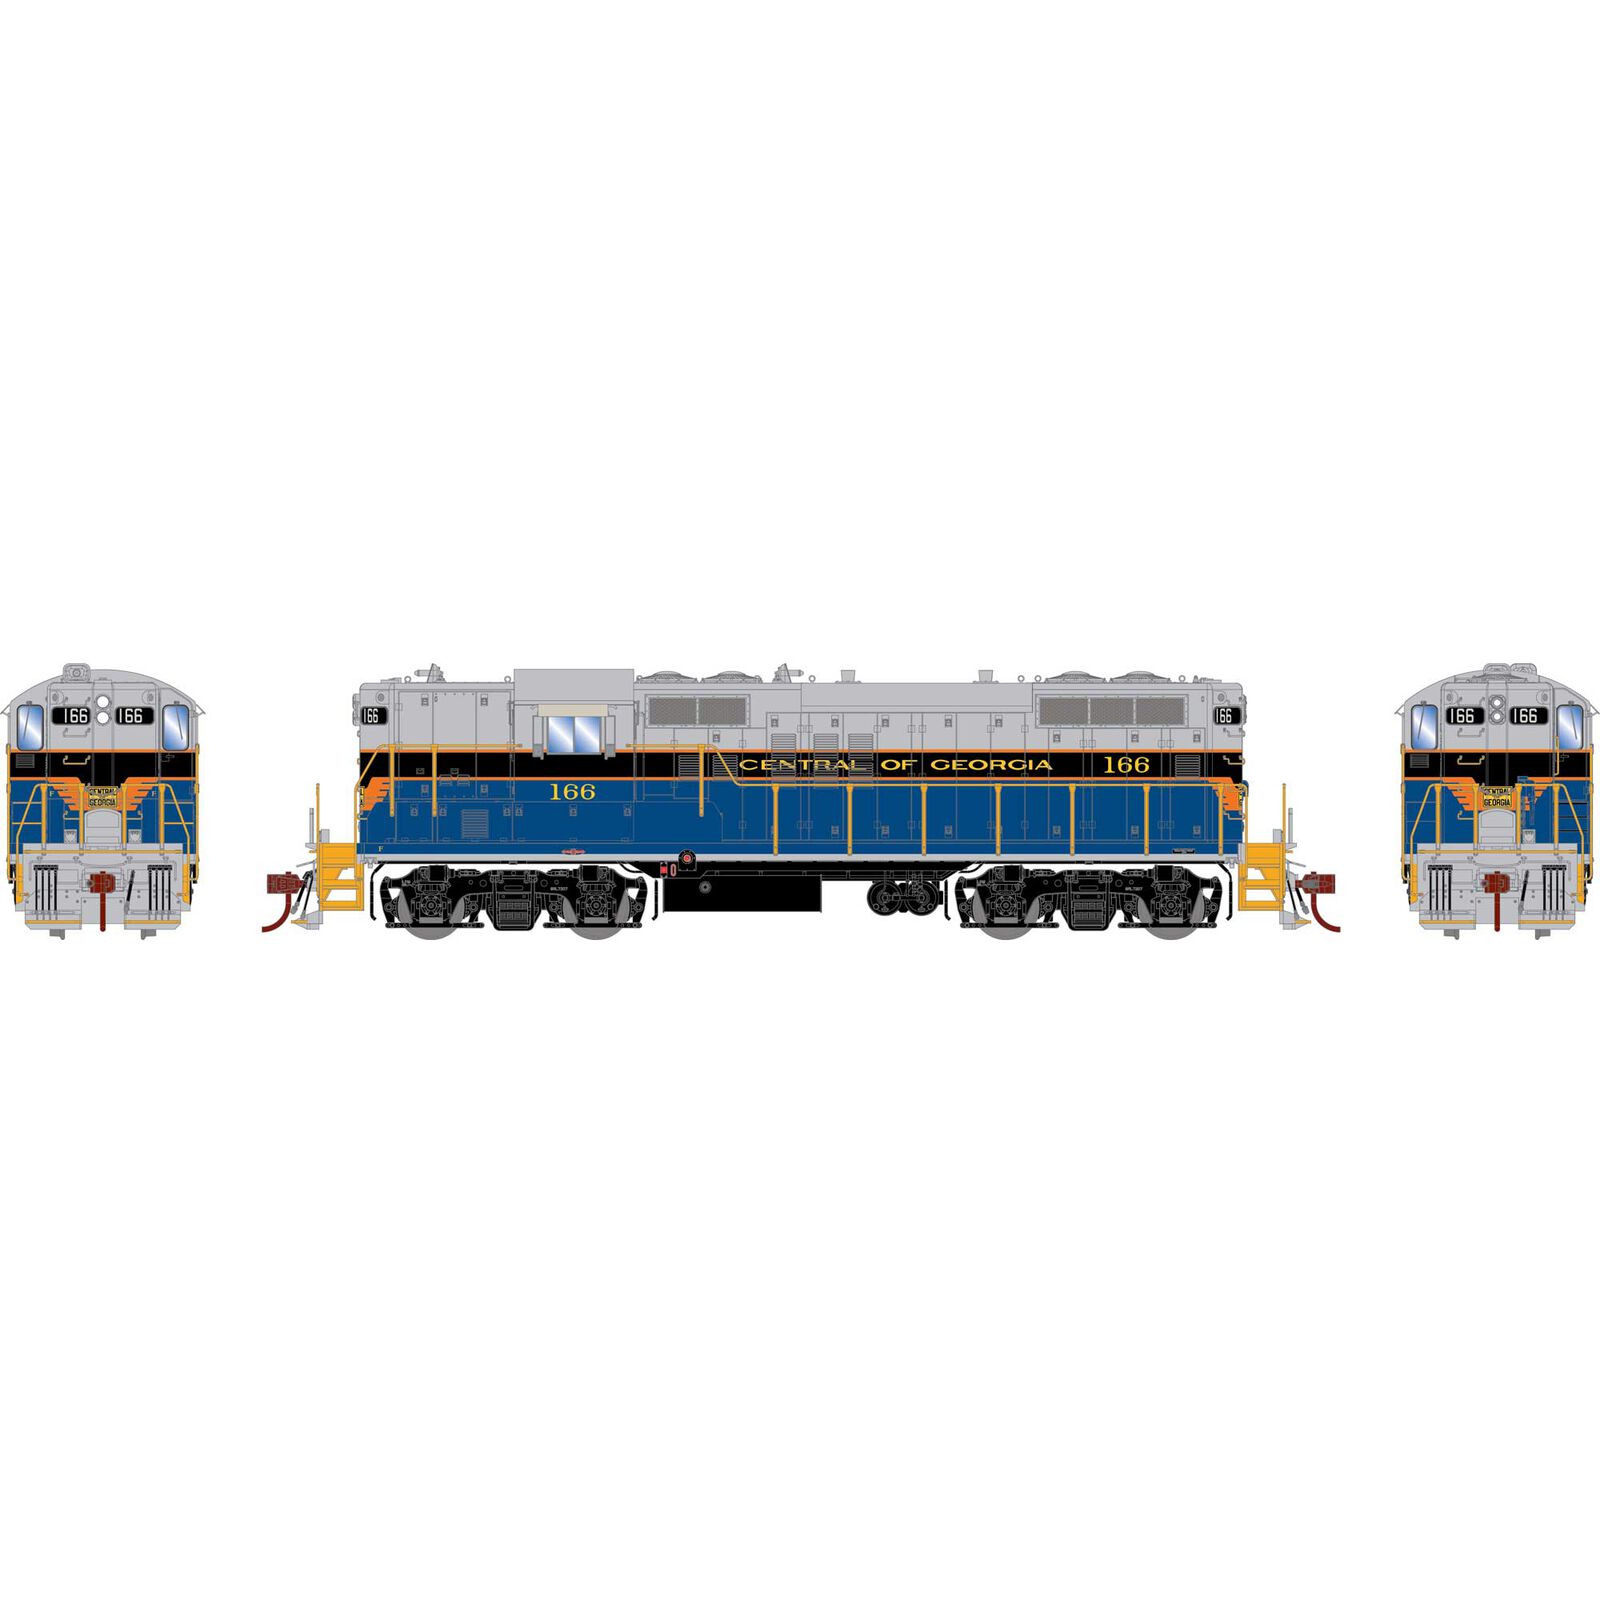 HO GP9 Locomotive with DCC & Sound, CG #166